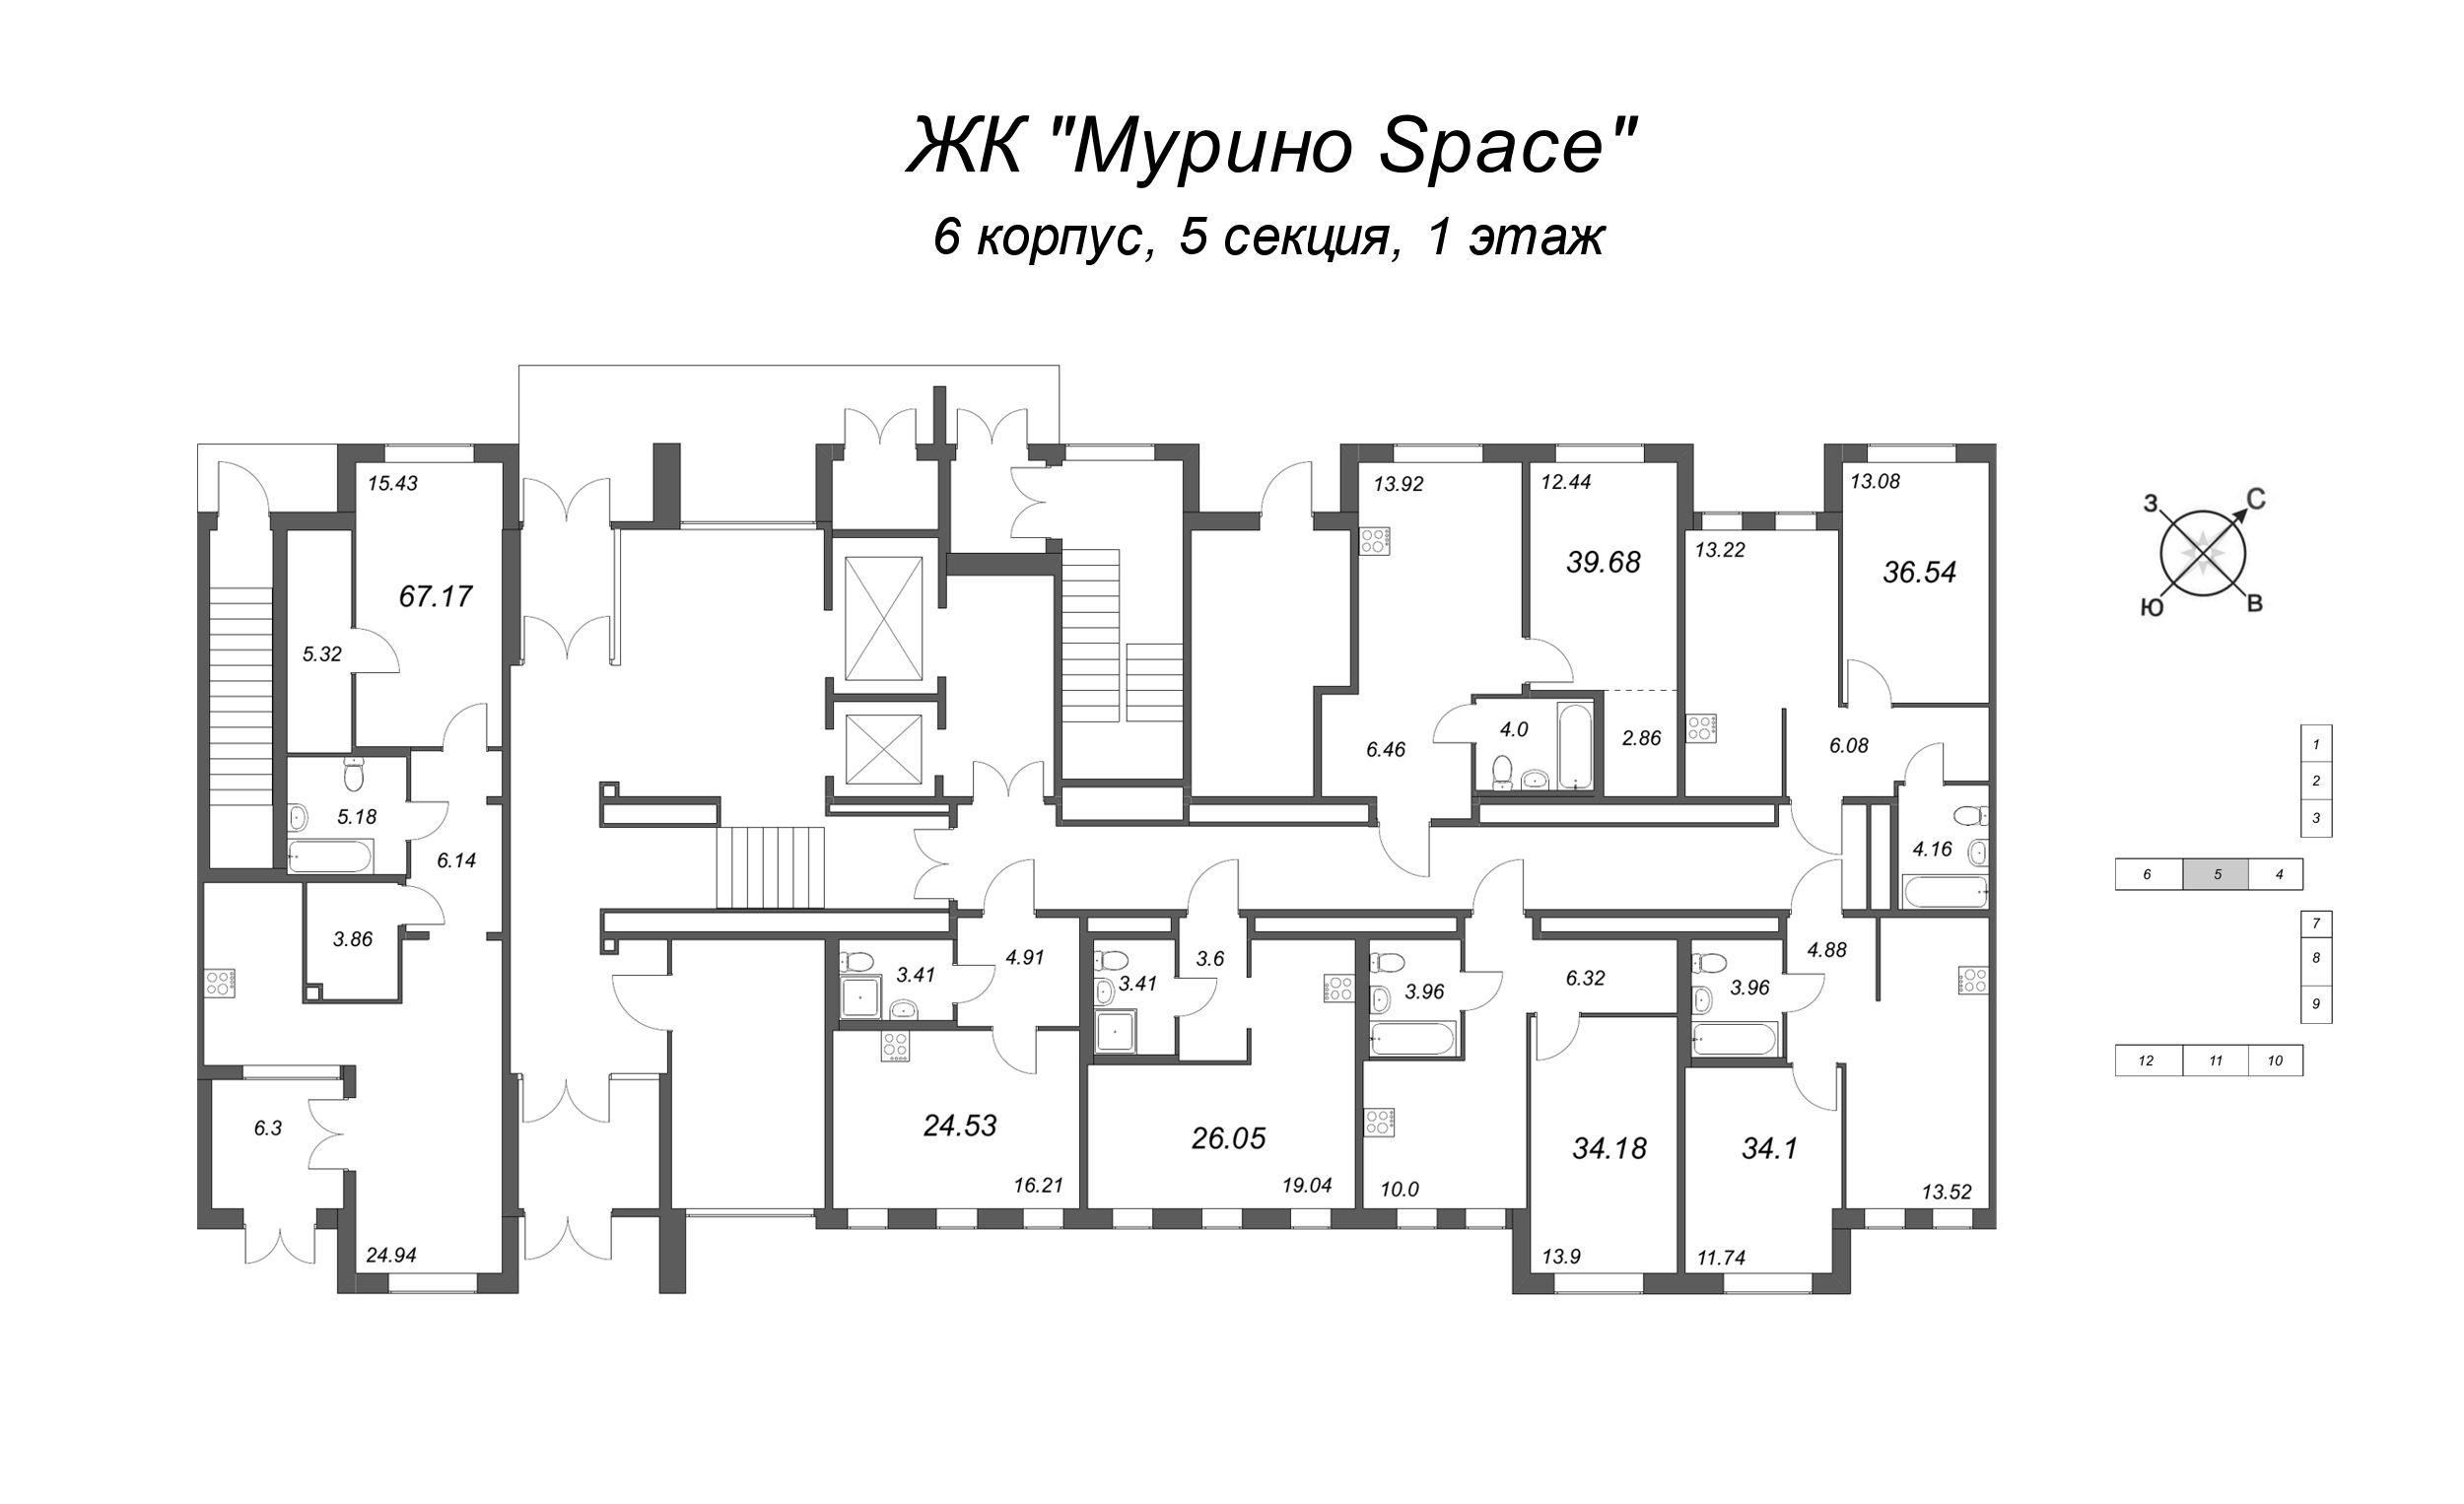 2-комнатная (Евро) квартира, 39.68 м² в ЖК "Мурино Space" - планировка этажа